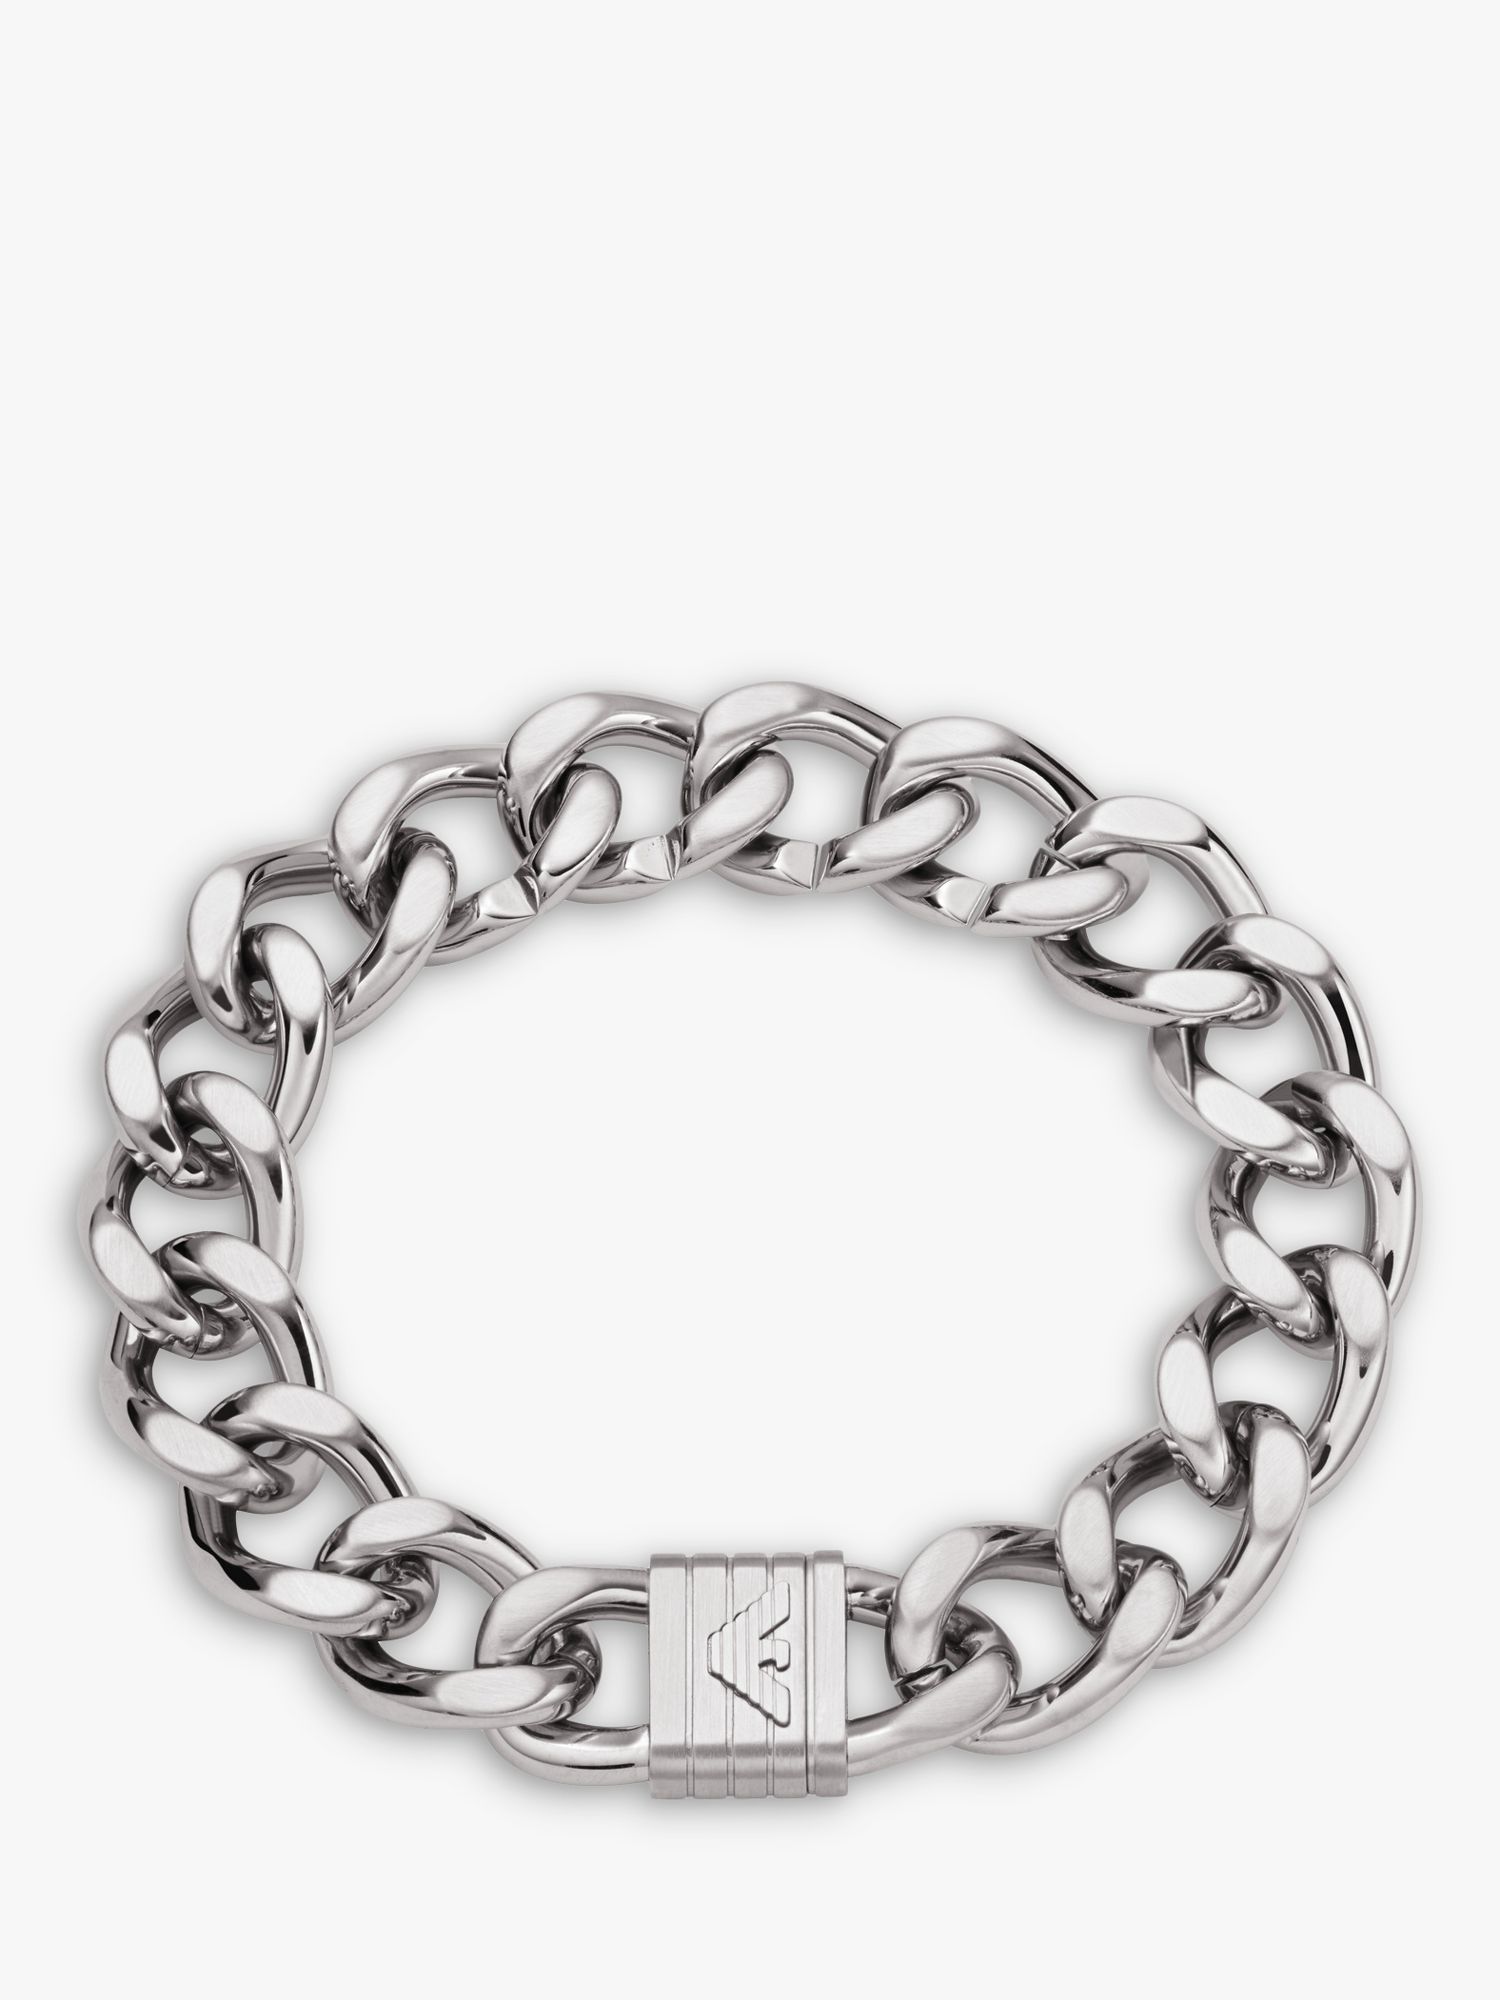 Emporio Armani EGS2905040 Men's Chain Bracelet, Silver